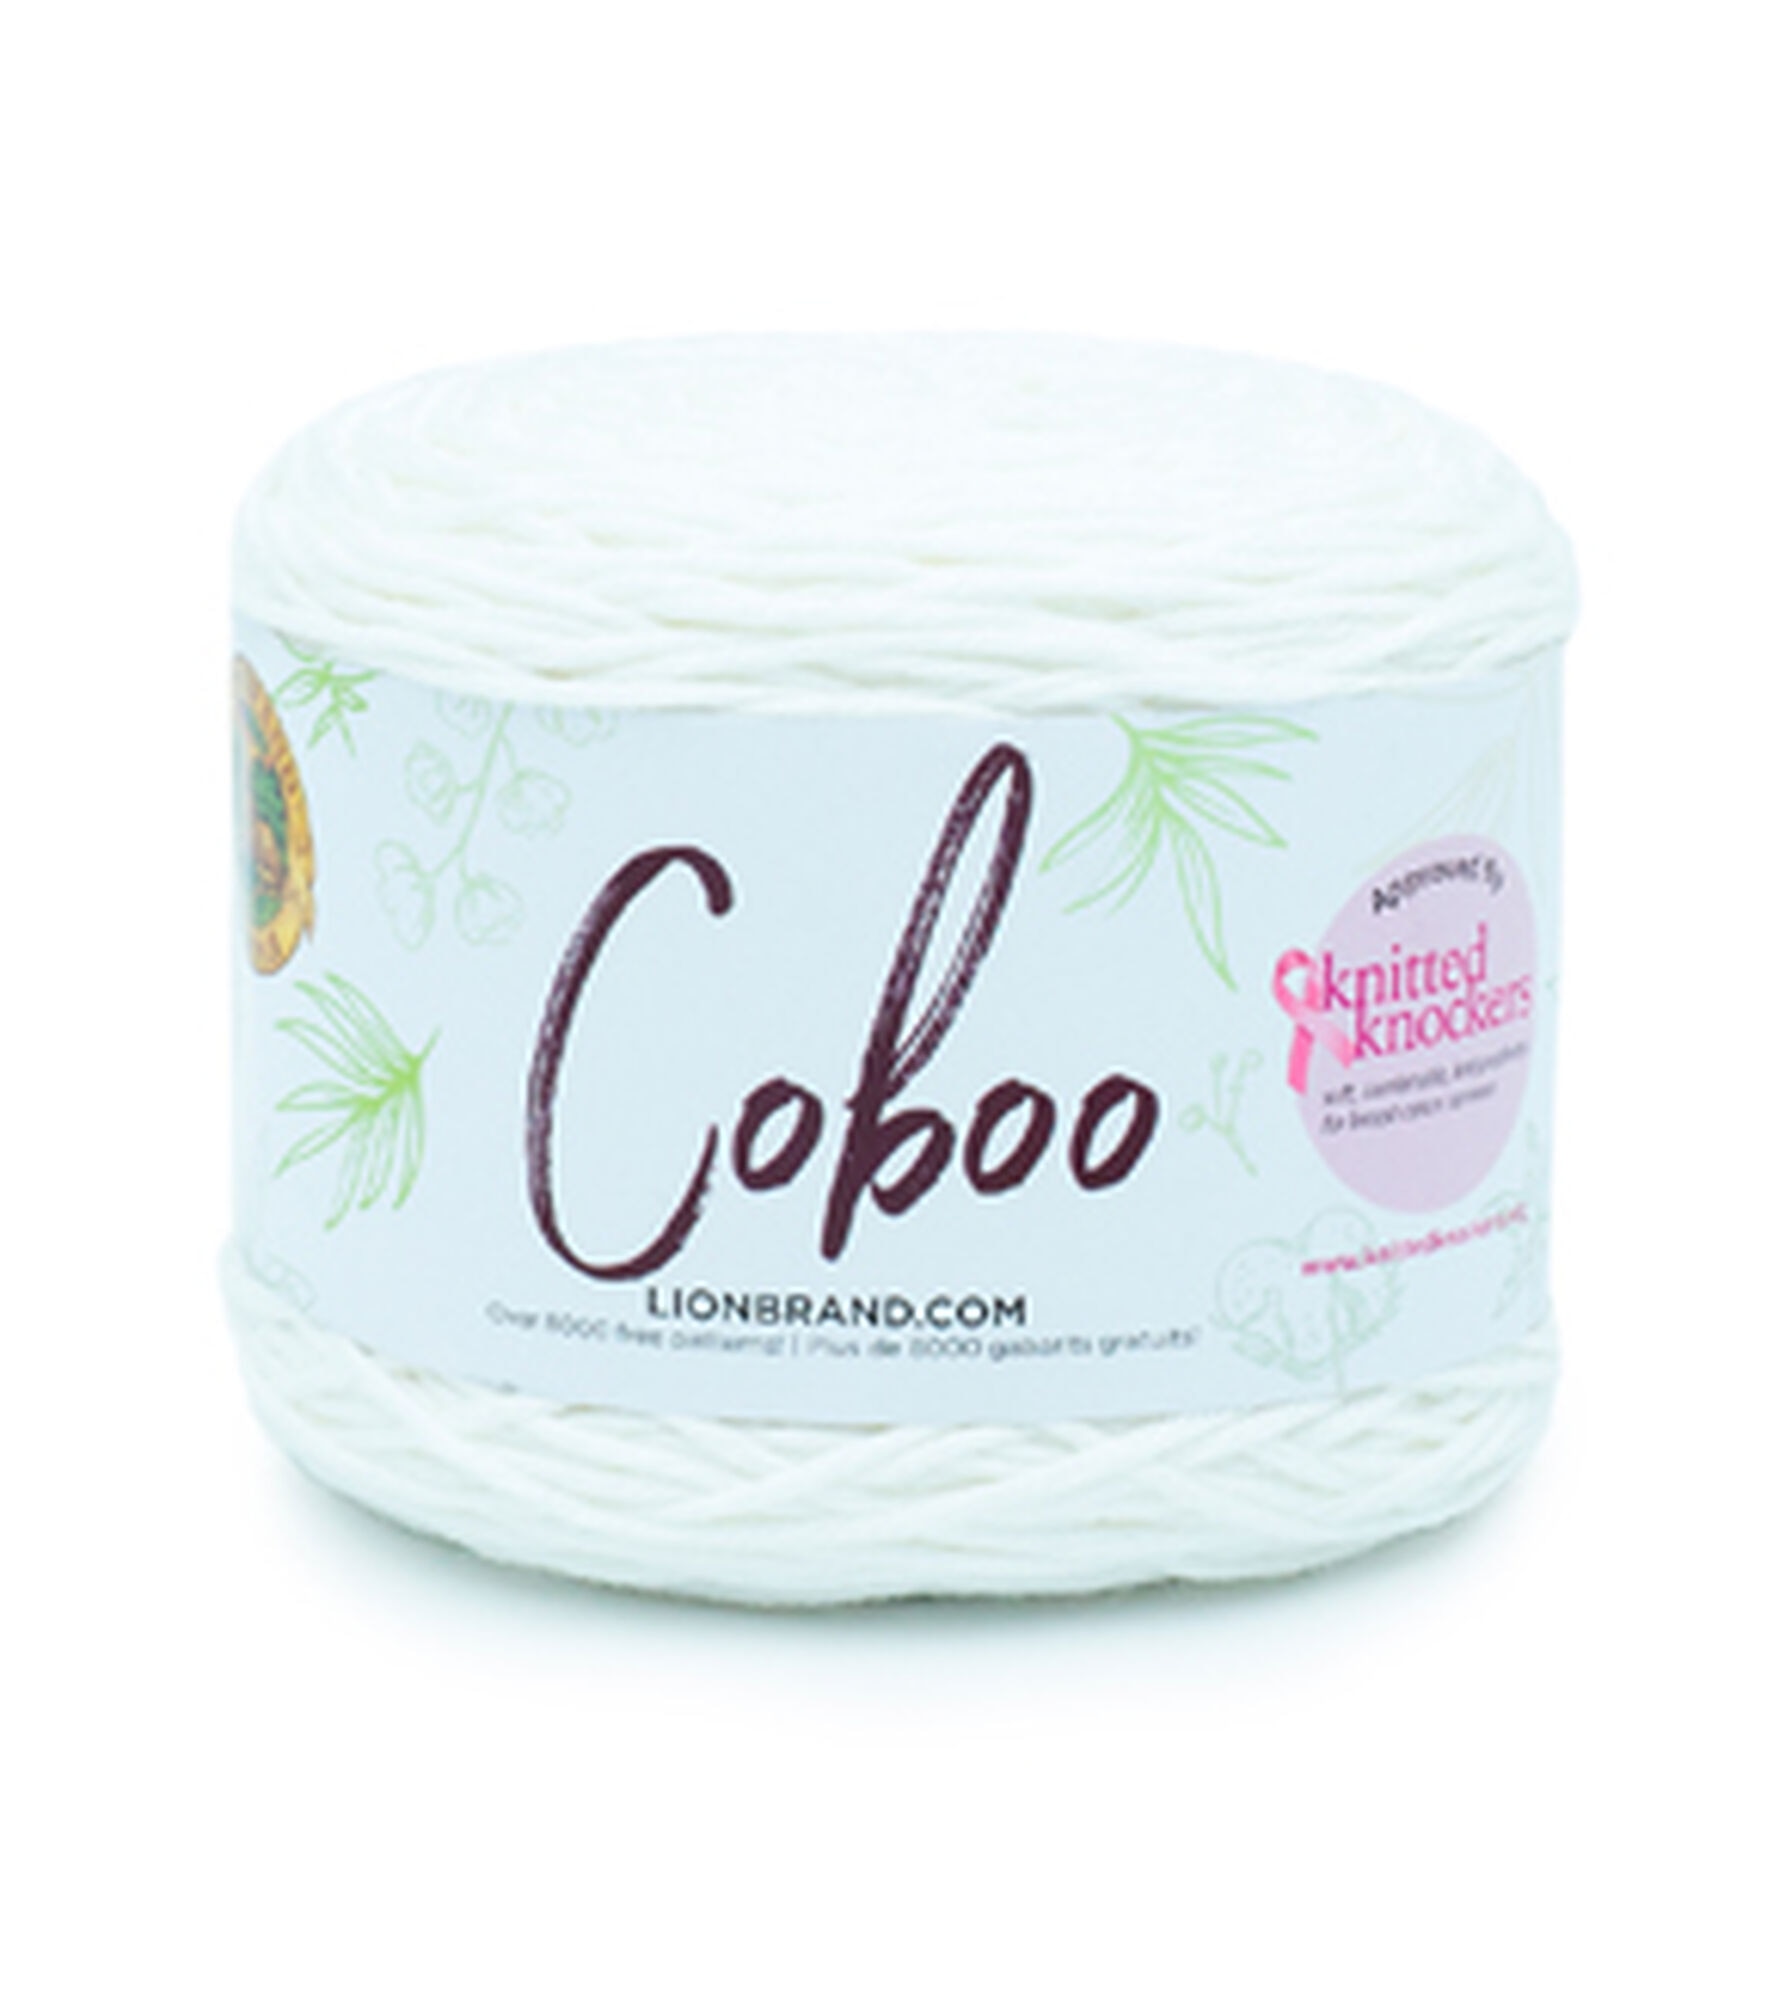 Lion Brand Coboo Natural Fiber 232yds Light Weight Cotton Yarn, White, hi-res